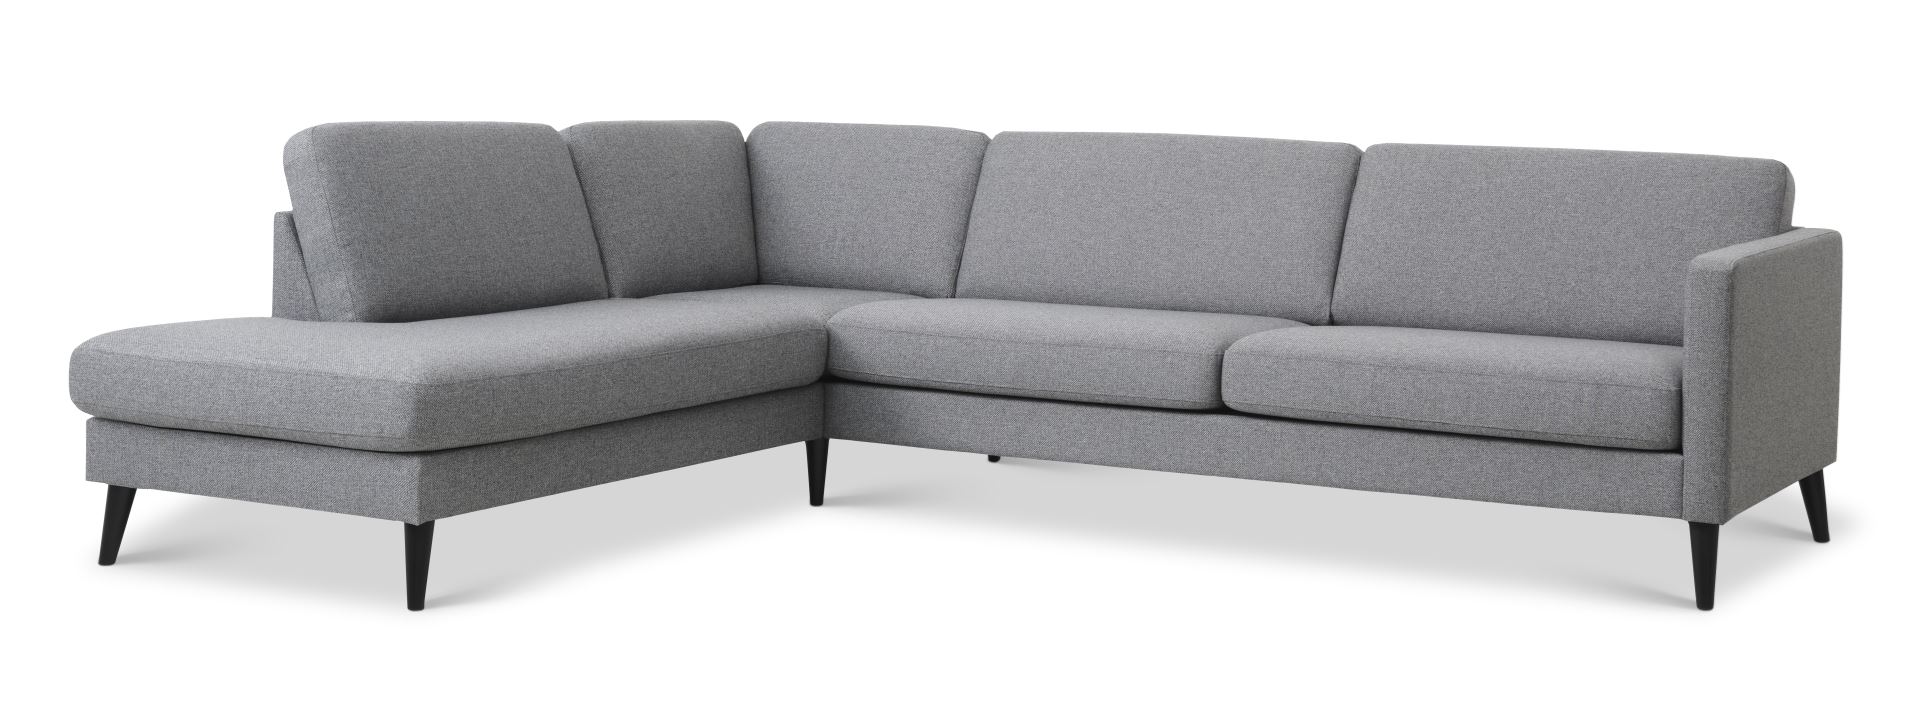 Ask sæt 60 stor OE sofa, m. venstre chaiselong - lys granitgrå polyester stof og sort træ